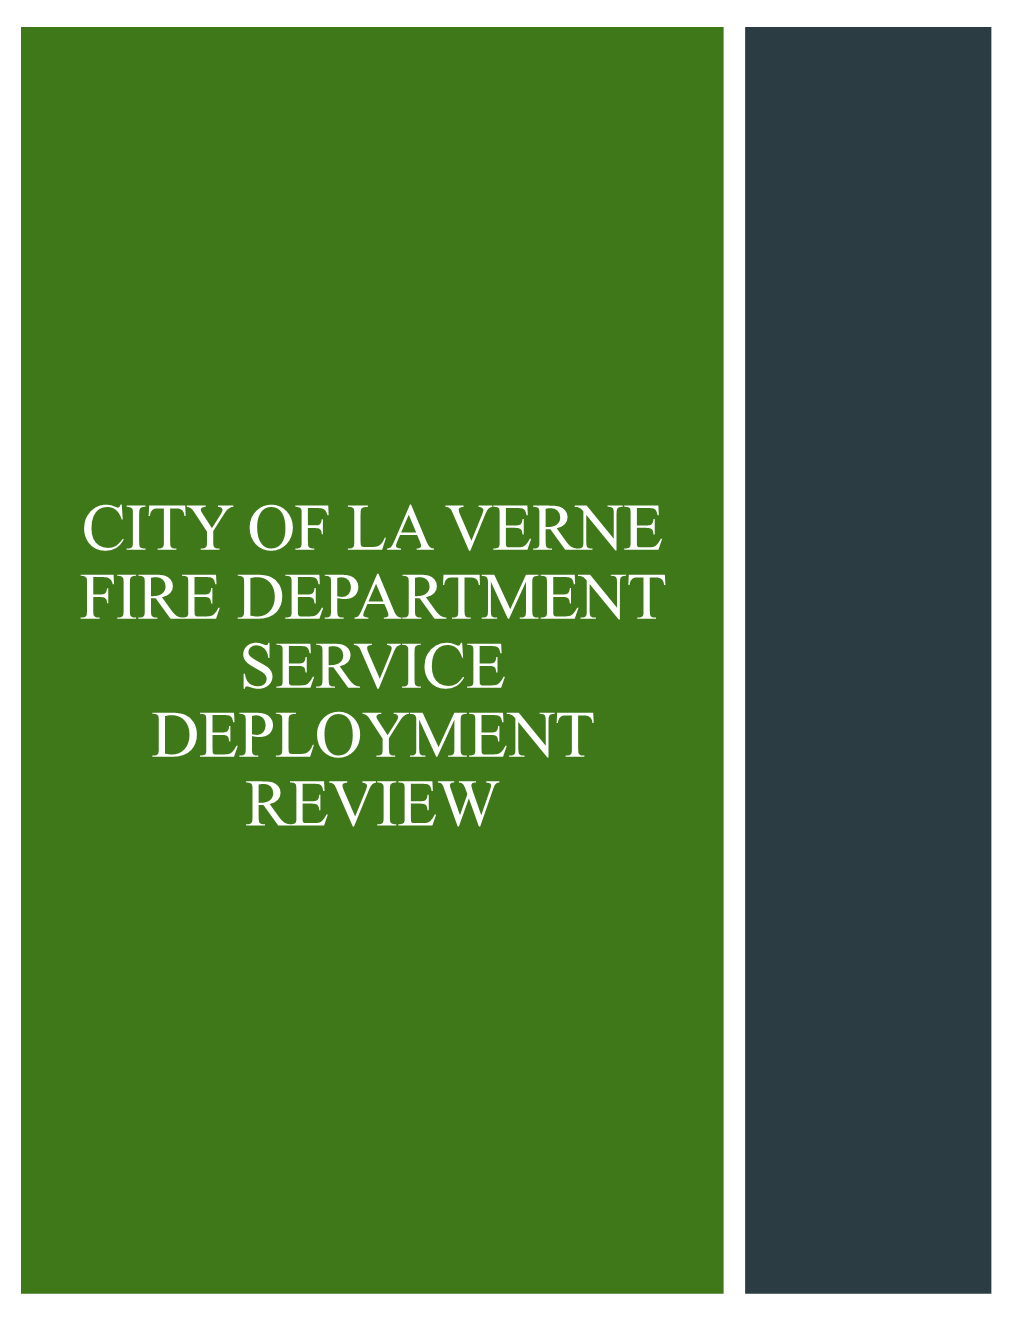 City of La Verne Fire Department Service Deployment Review